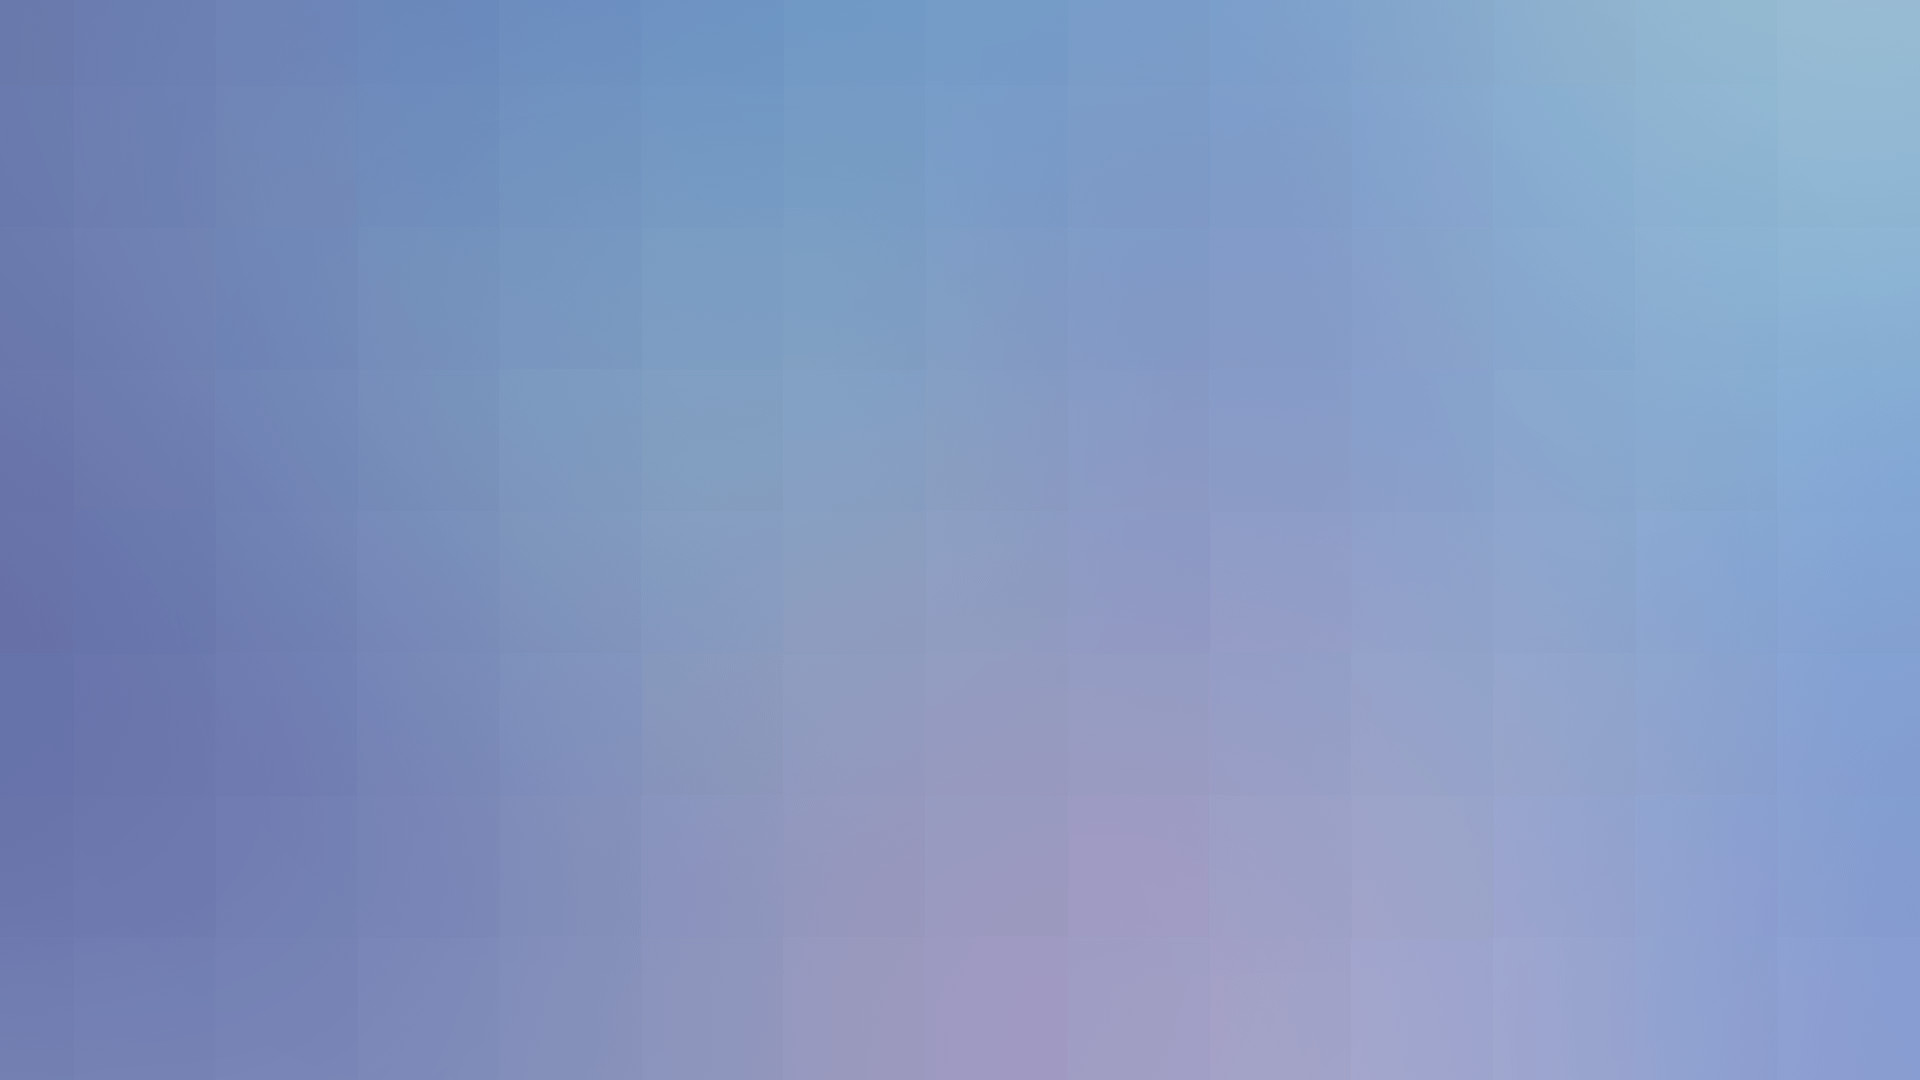 General 1920x1080 blurred gradient pattern minimalism simple background digital art